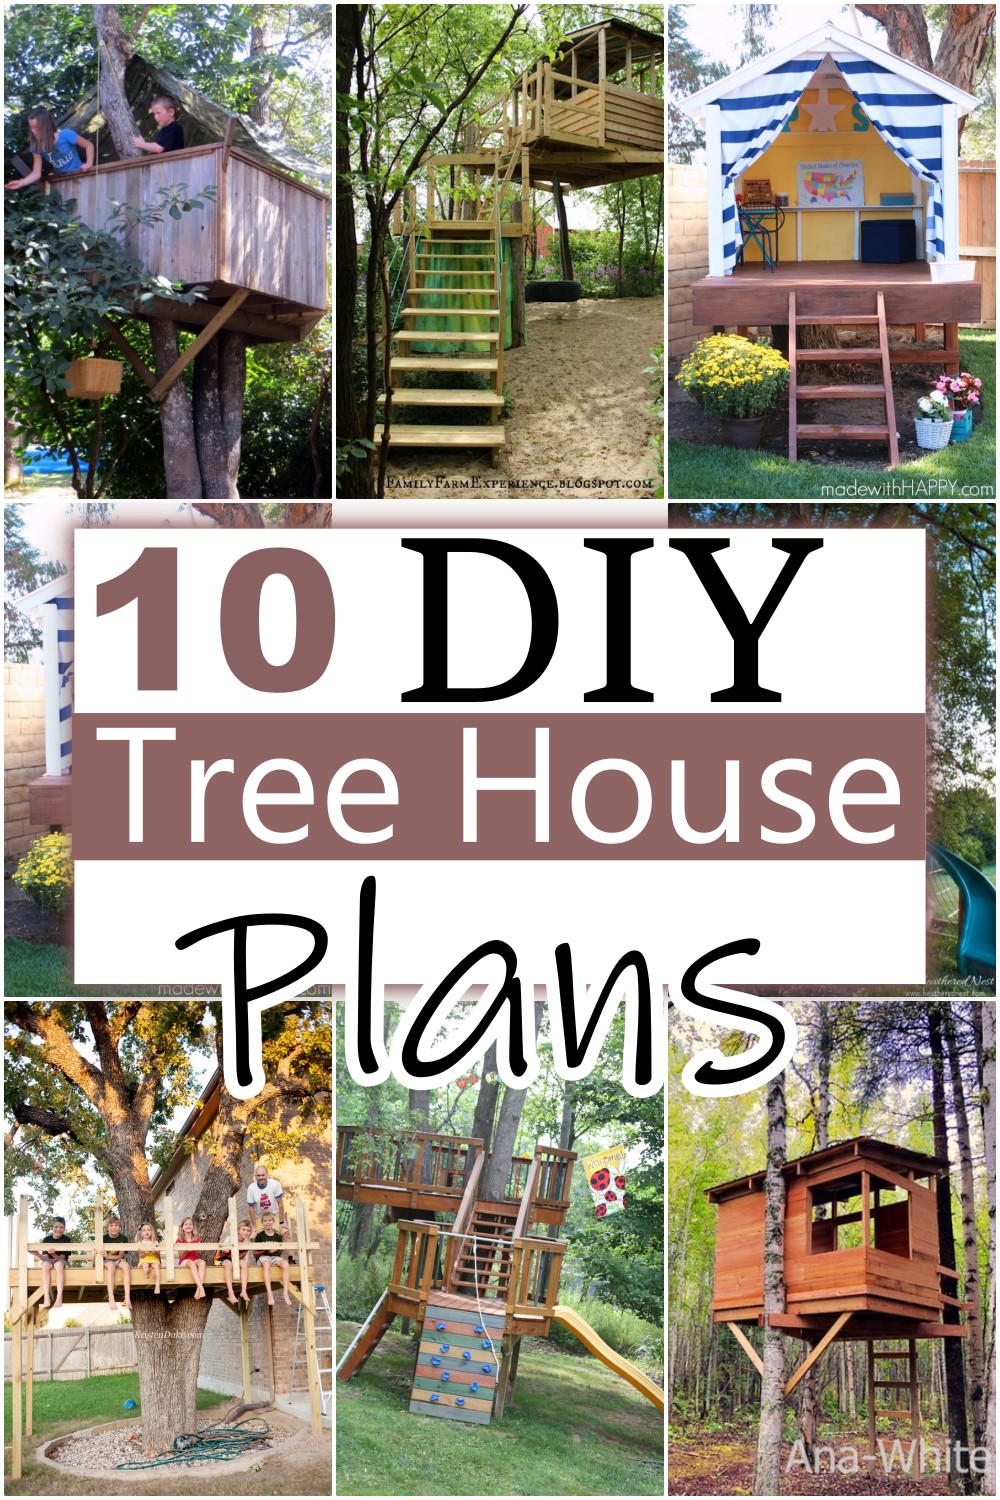 DIY Tree House Plans